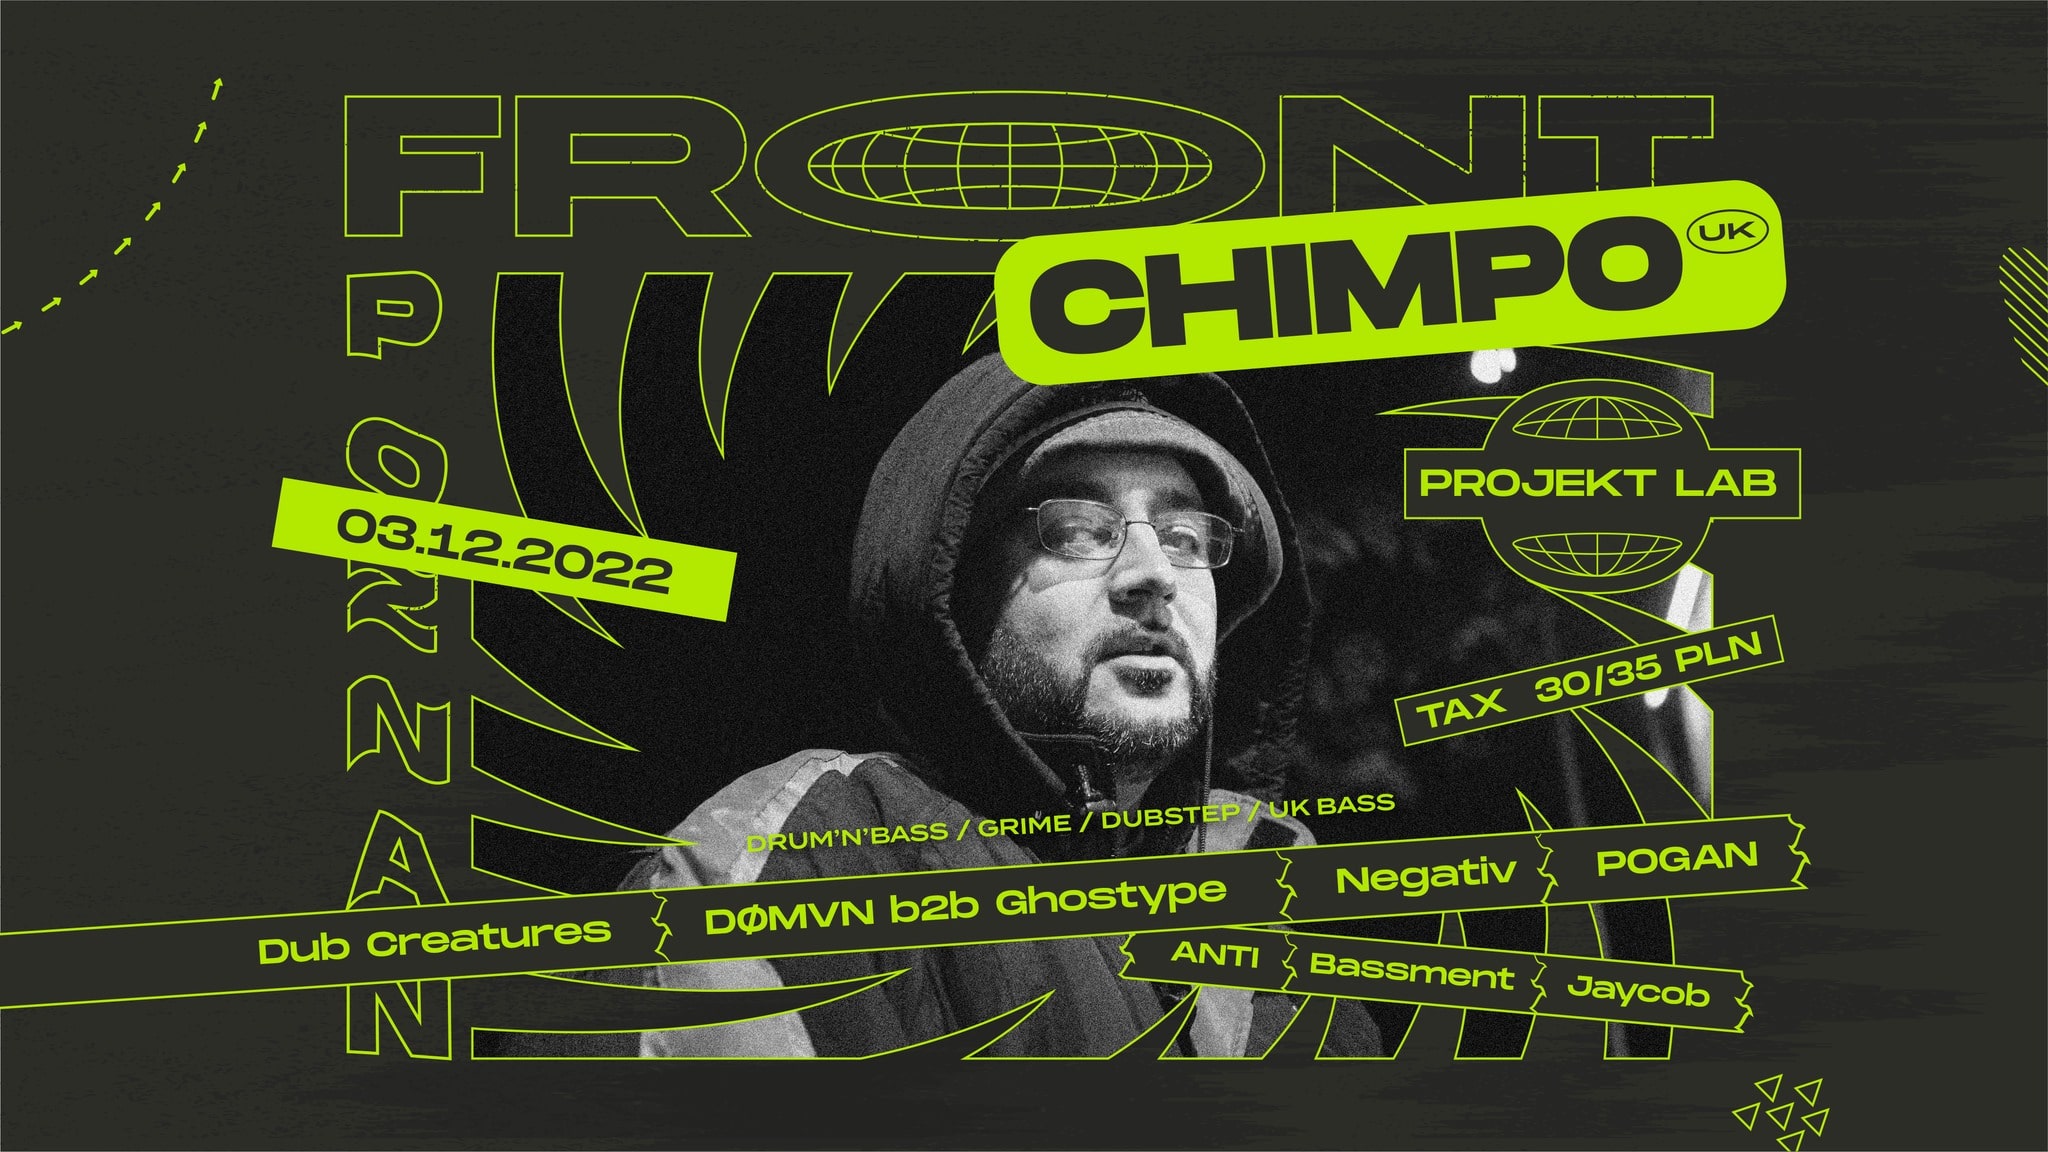 FRONT #5 – CHIMPO (UK) | Negativ | Pogan | Bass thing all night long